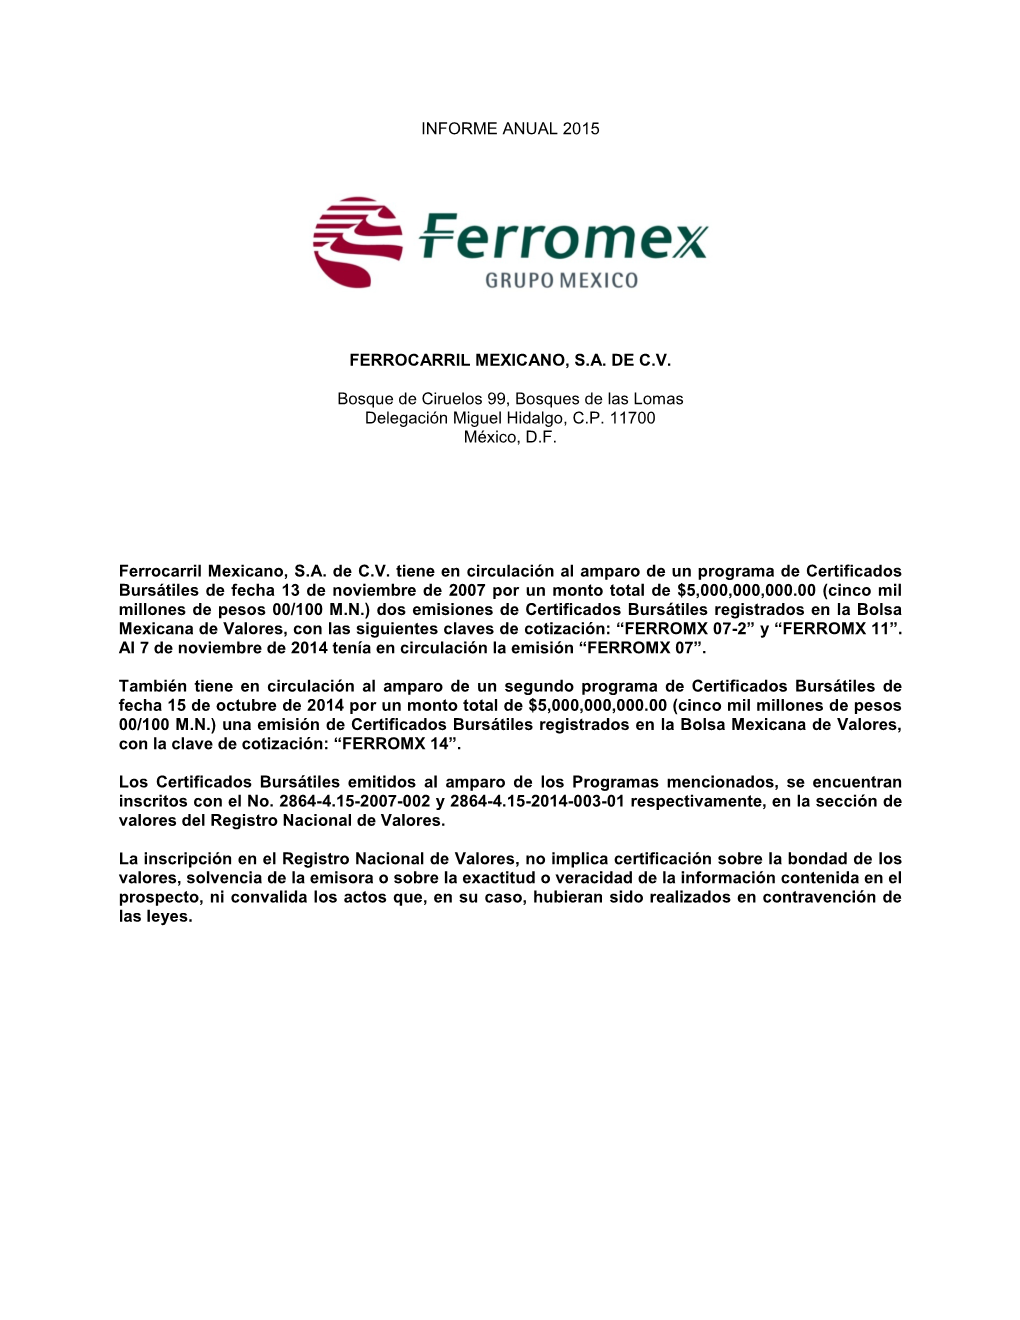 Informe Anual 2015 Ferrocarril Mexicano, S.A